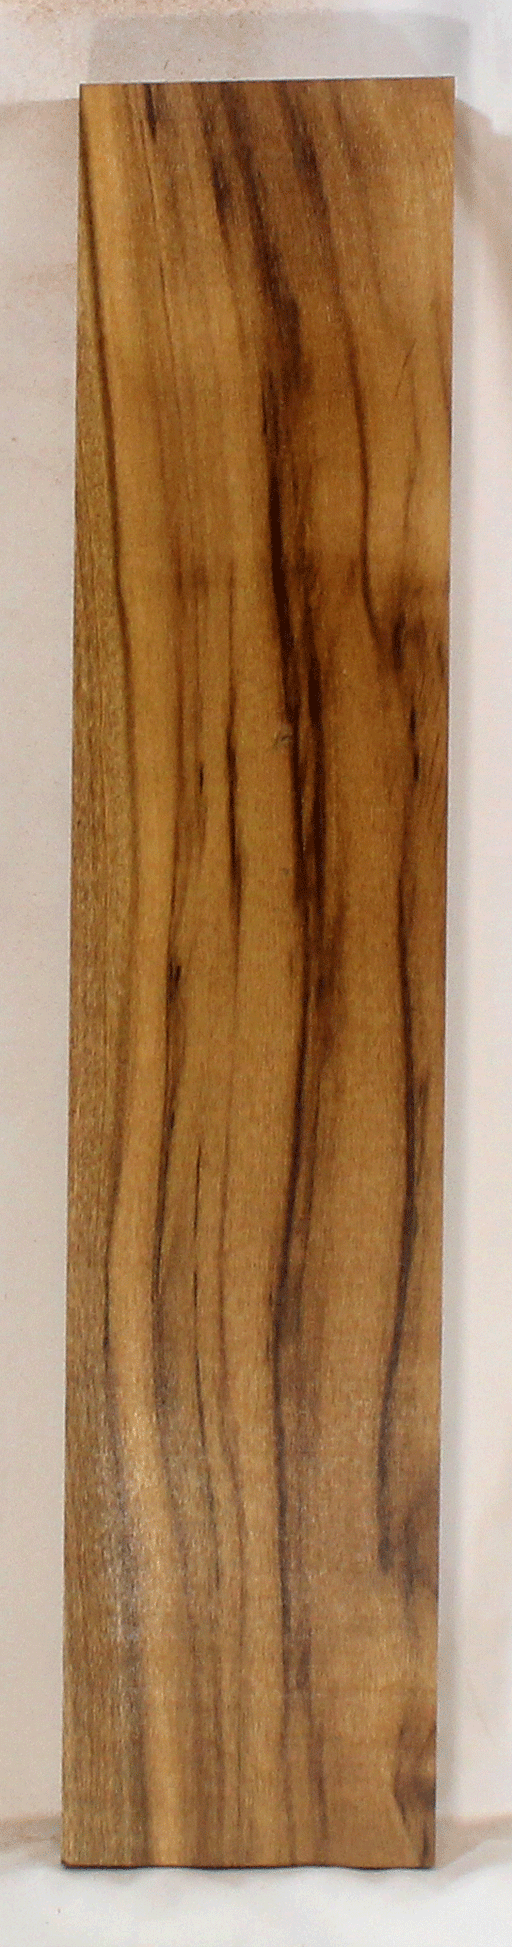 Myrtle Bow Wood Riser